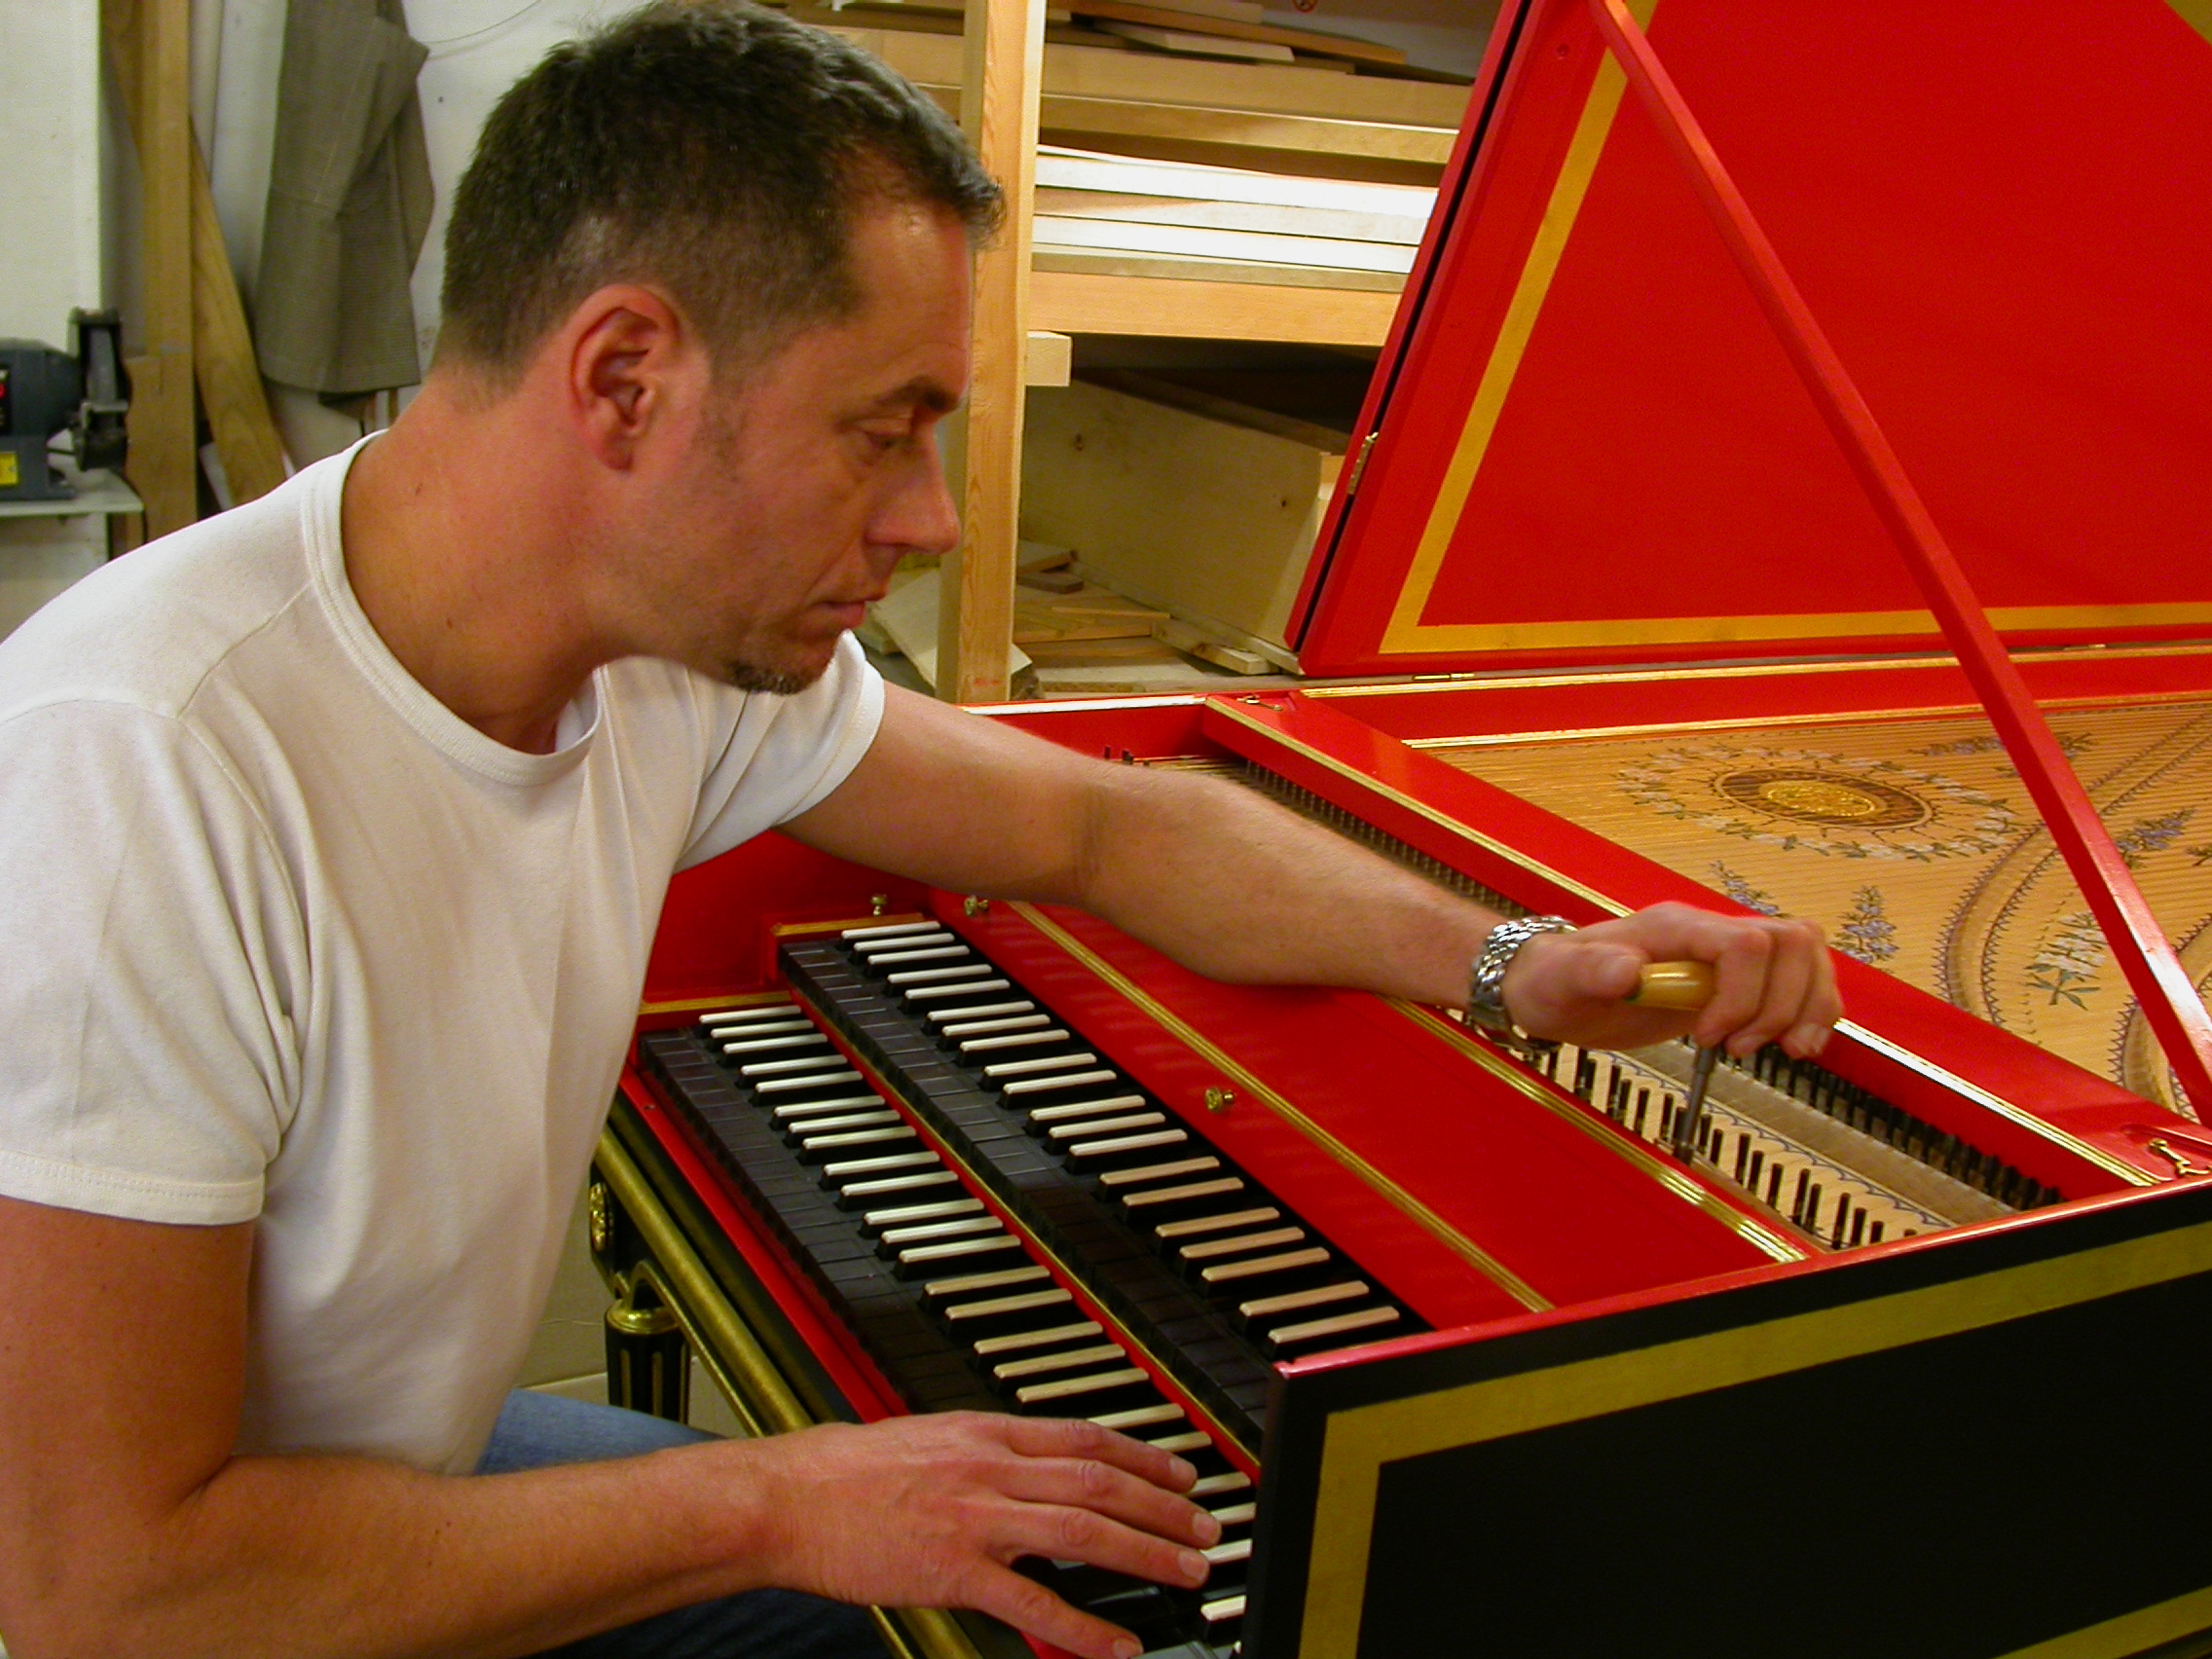 paul piano instrument maker craftsman craft wood worker